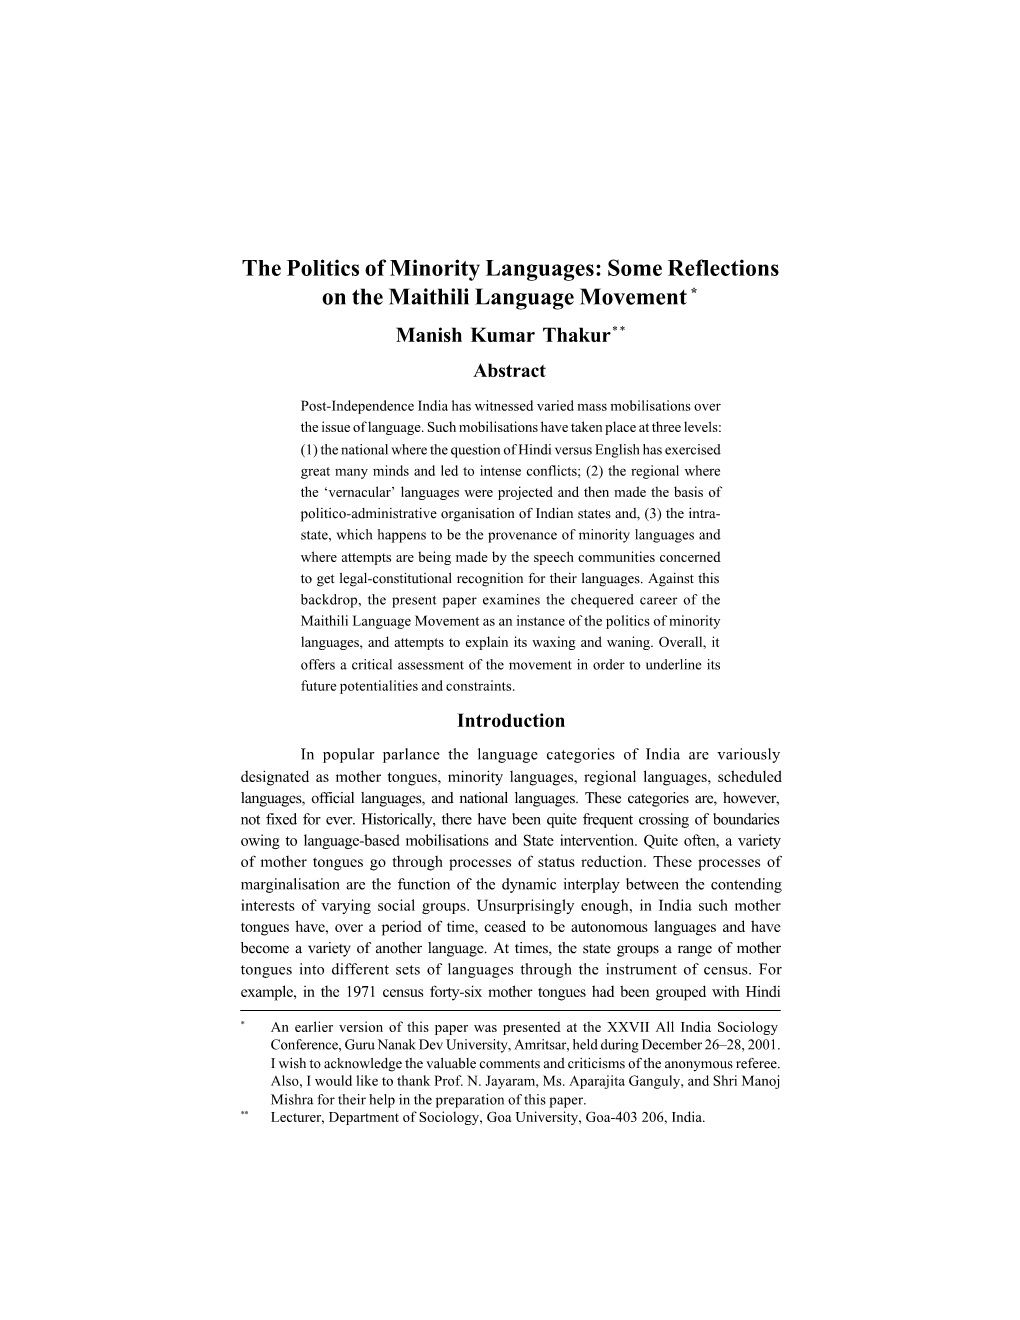 The Politics of Minority Languages: Some Reflections on the Maithili Language Movement * Manish Kumar Thakur** Abstract